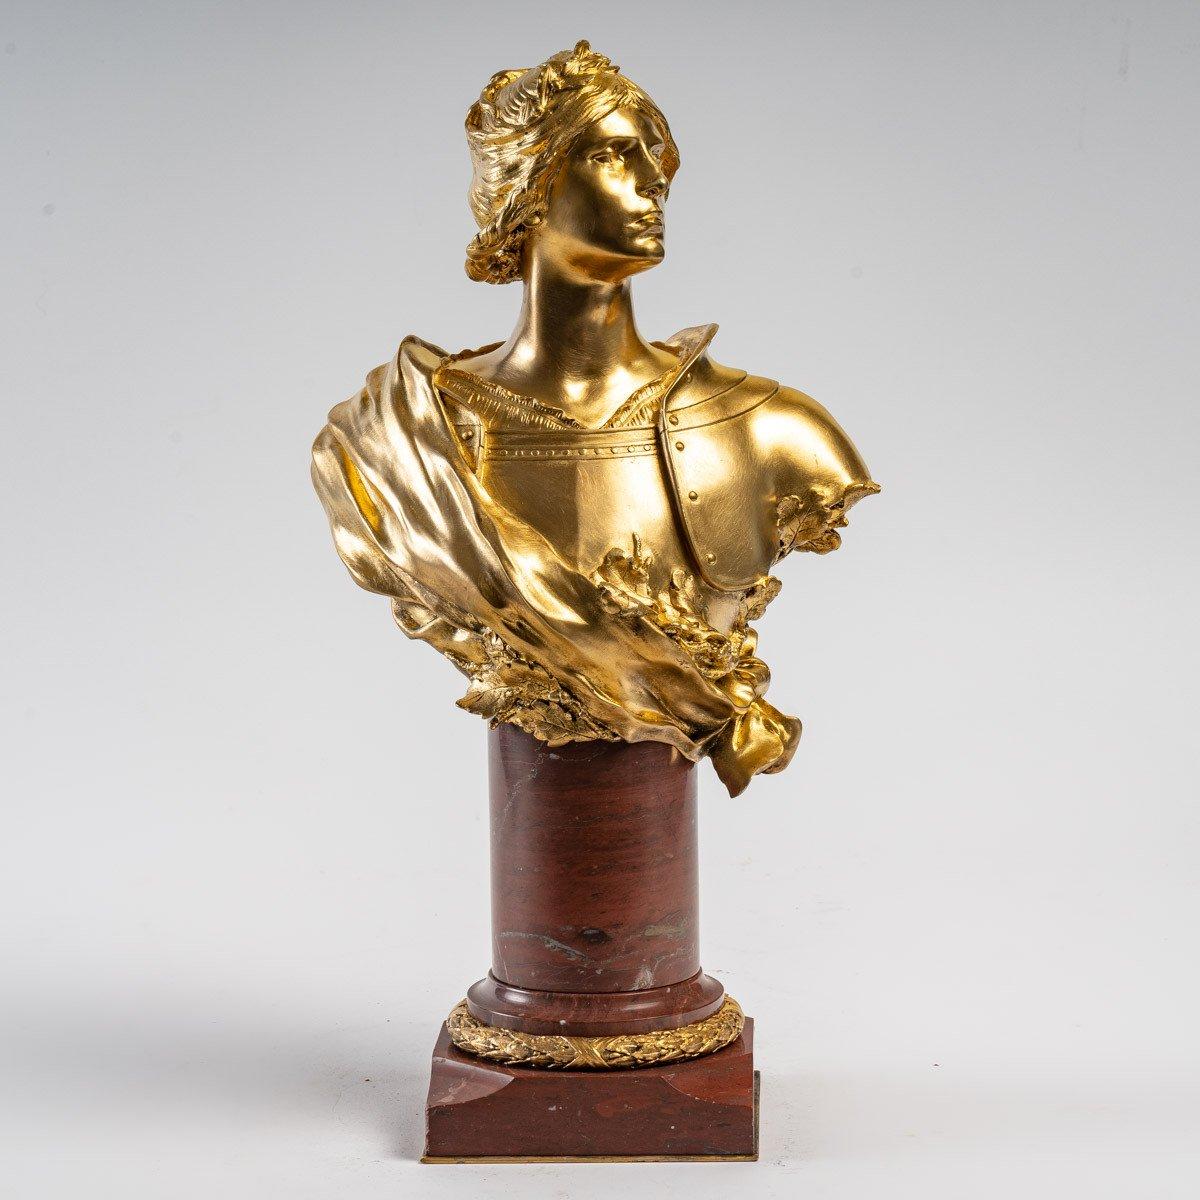 Art Nouveau Sculpture of Joan of Arc by François Sicard in gilded bronze